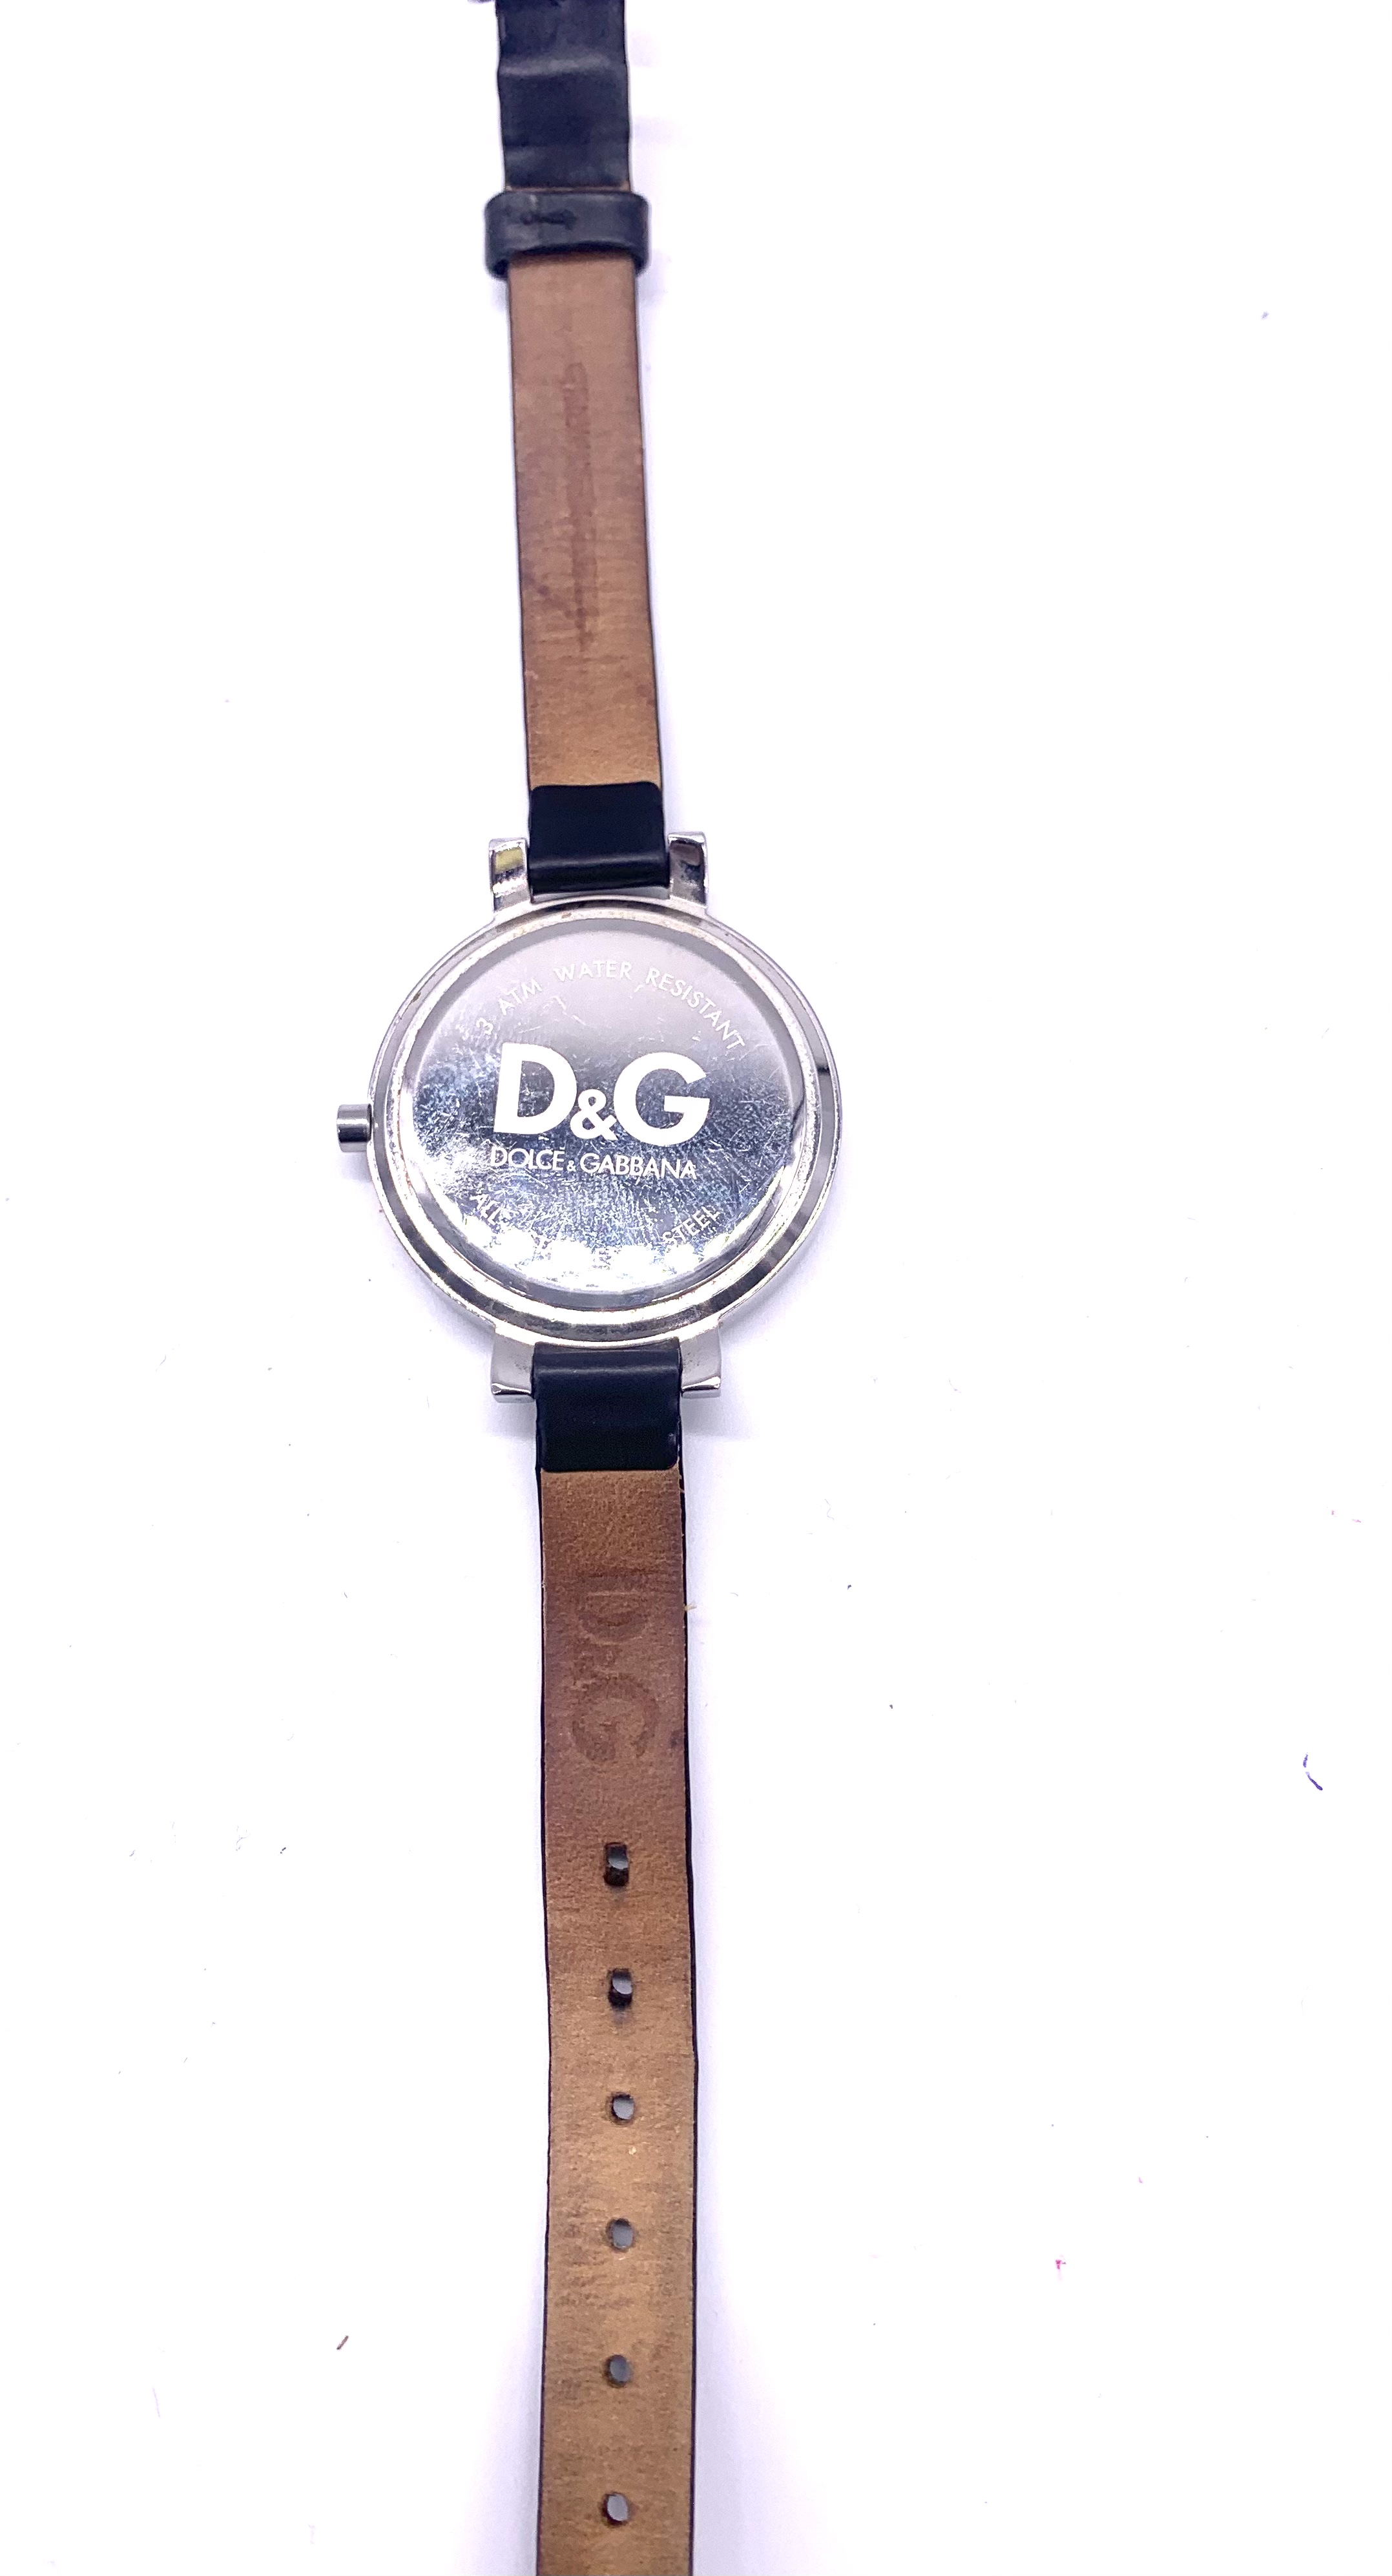 Reloj Dolce &Gabbana Quartz